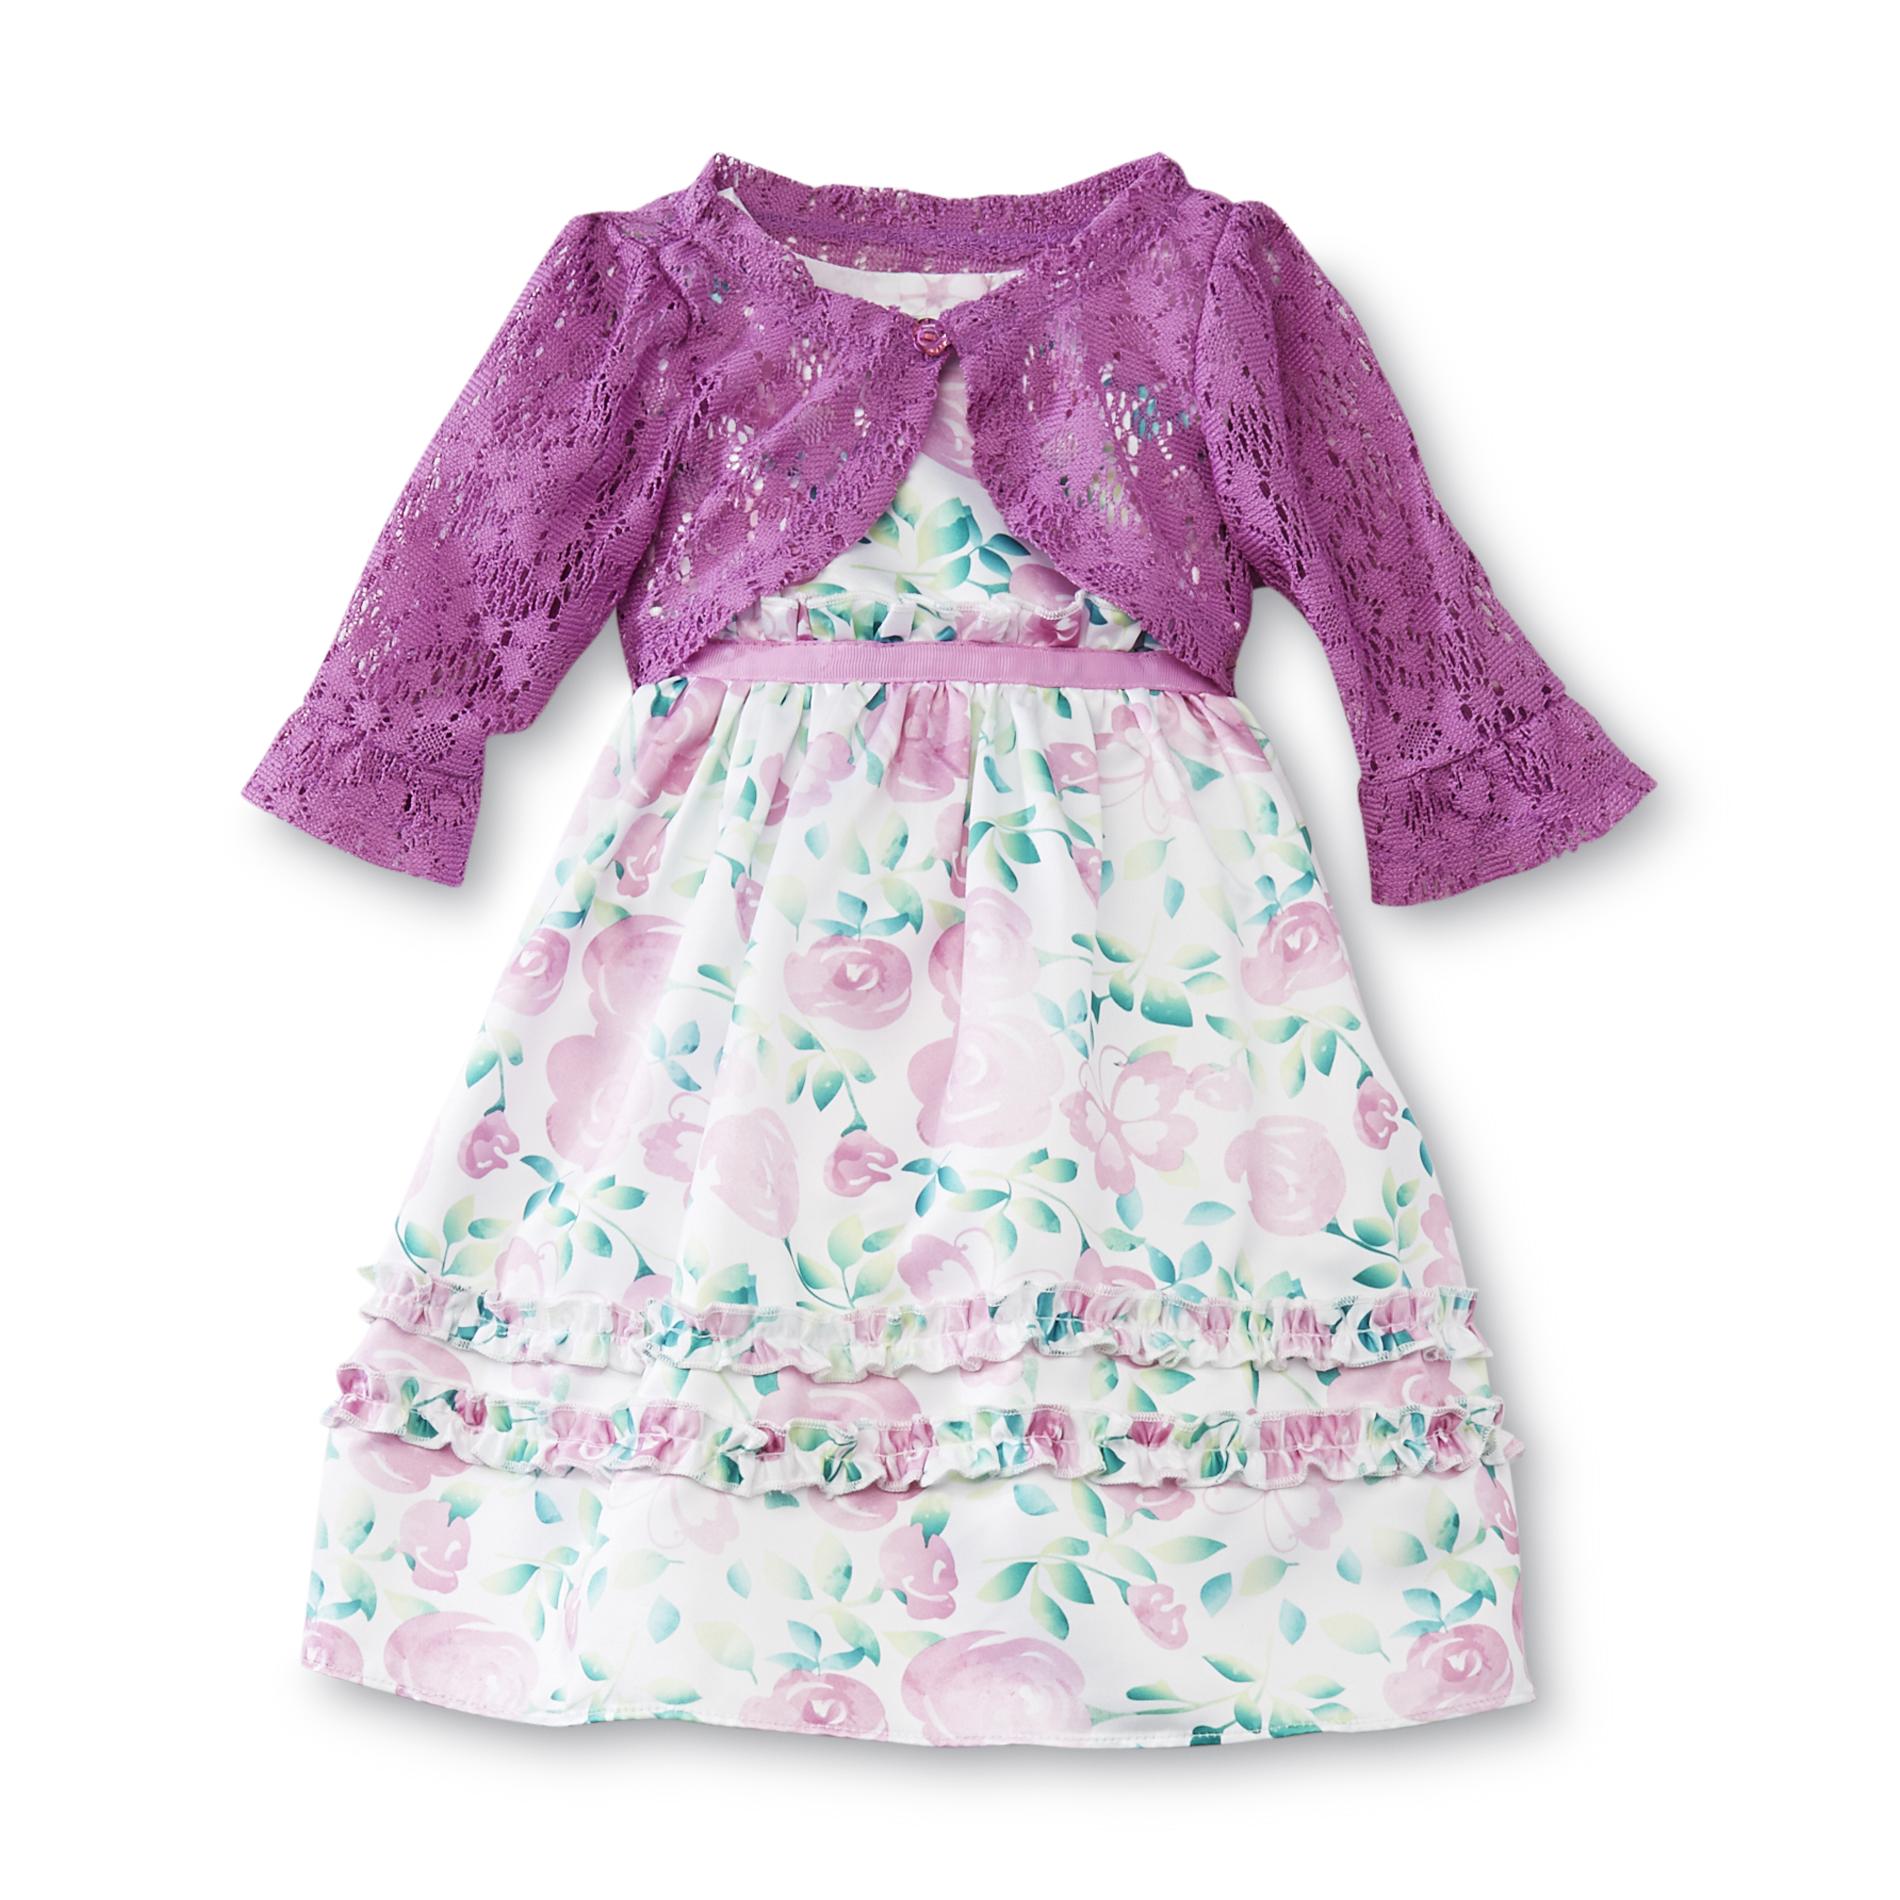 Holiday Editions Infant & Toddler Girls Dress & Shrug - Floral